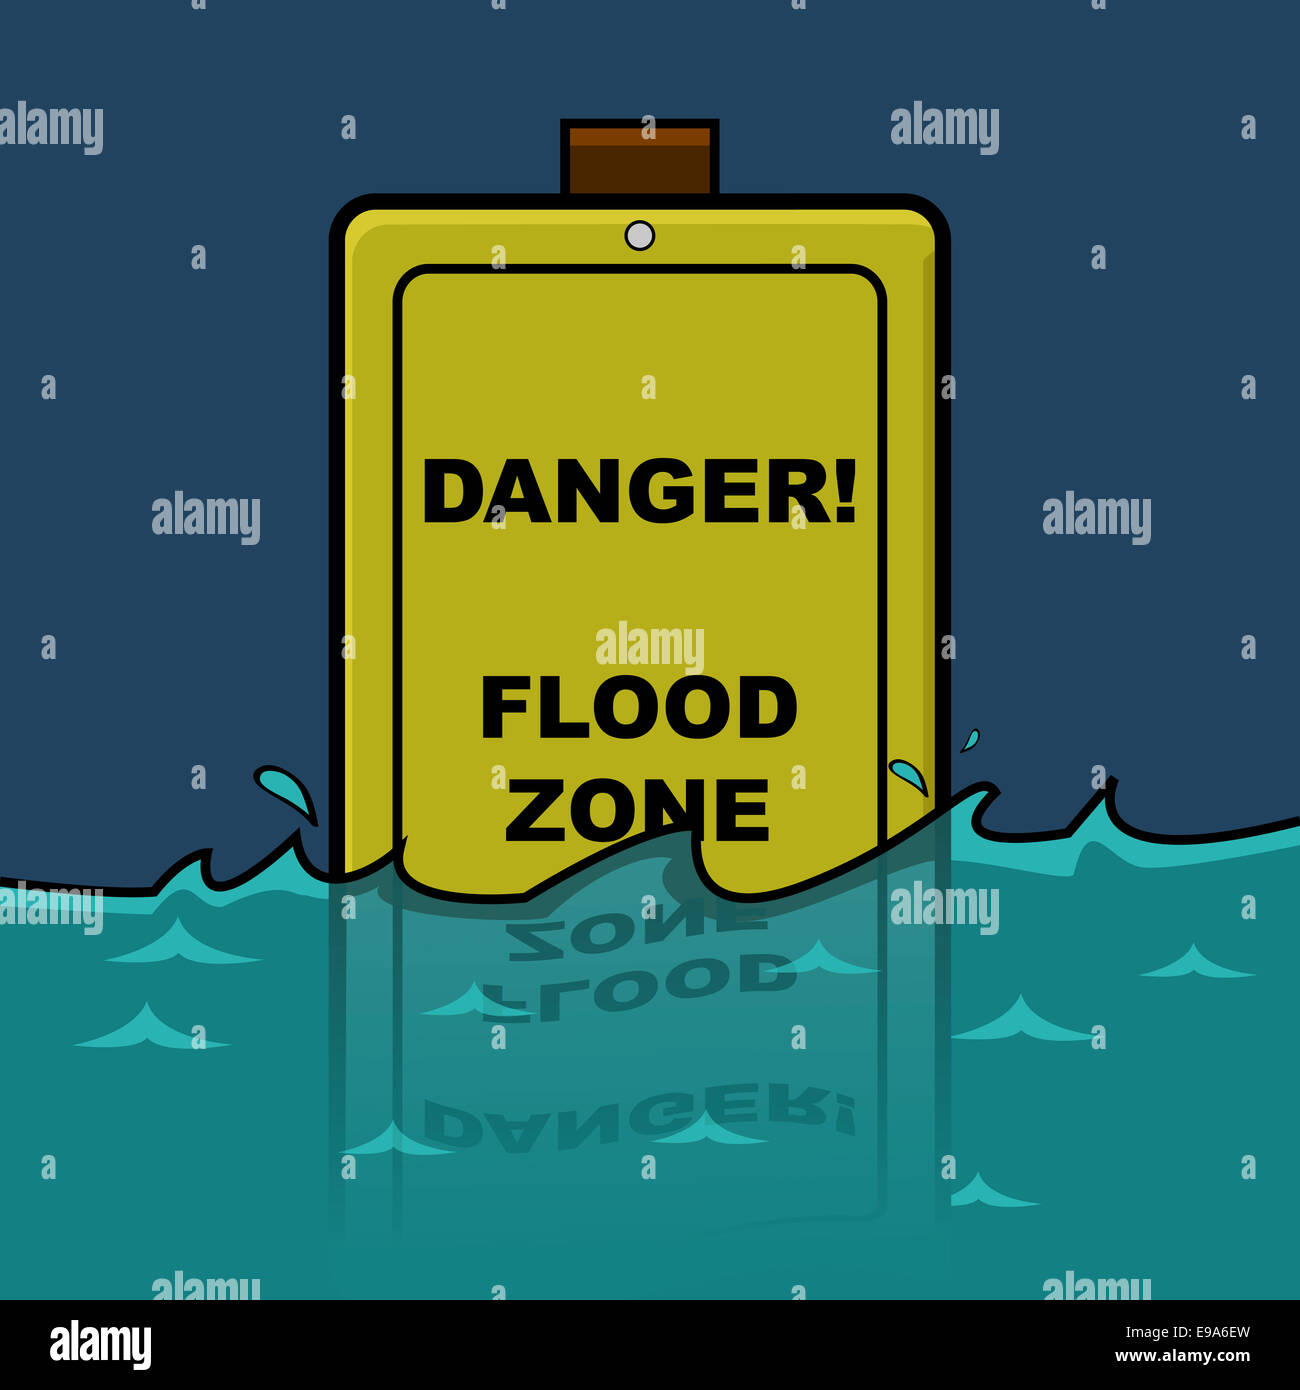 Flood zone Stock Photo